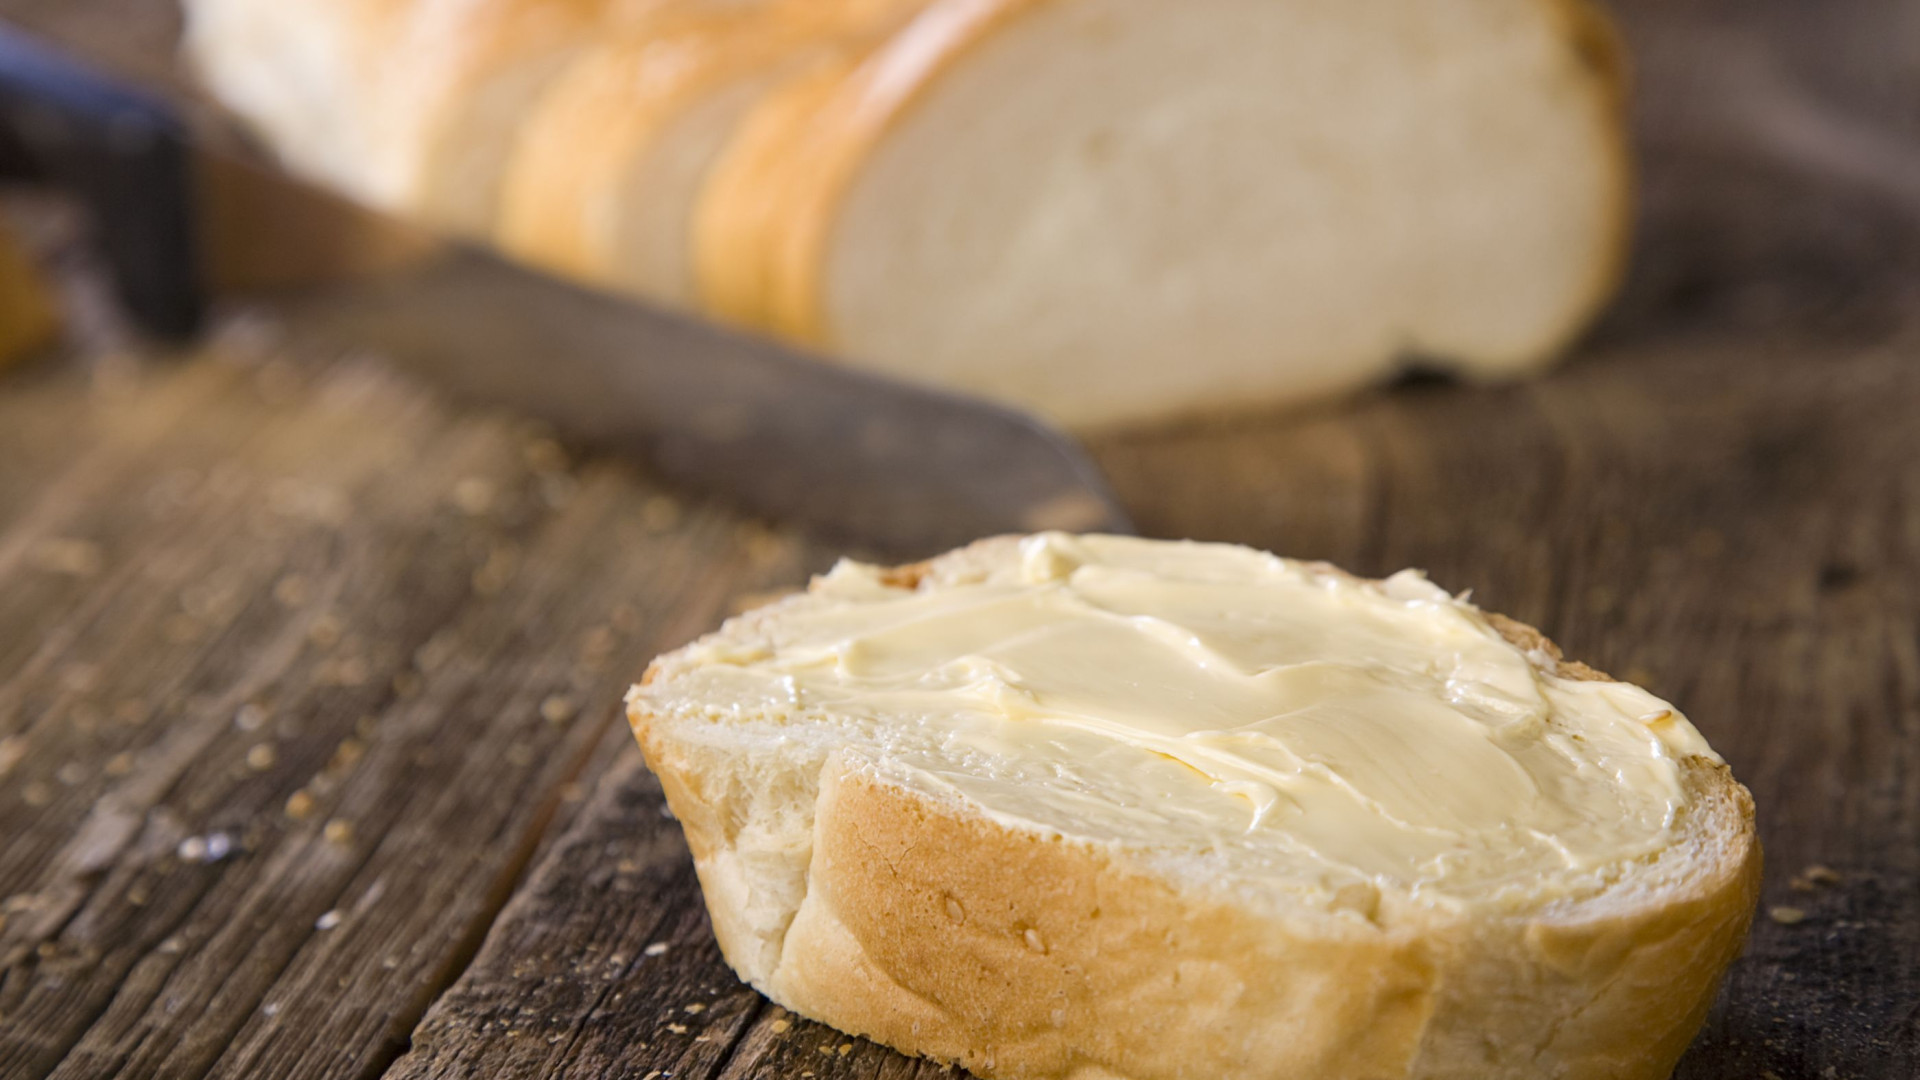 O que é pior para a saúde, manteiga ou margarina? Estudo responde